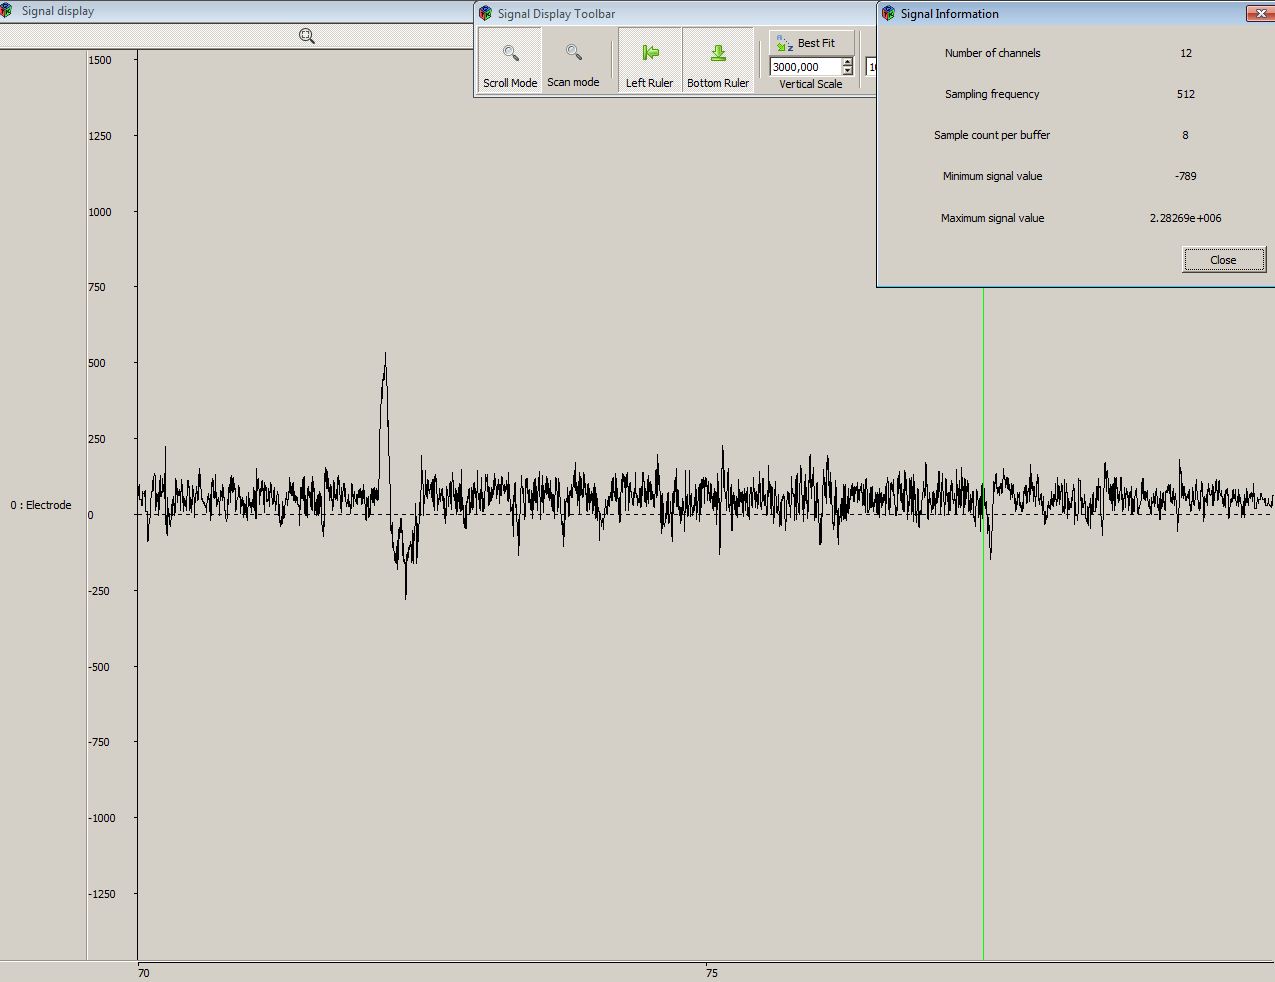 Screenshot-MindWave ONLY RAW EEG SIGNAL (Signal name - Electrode) AND Signal Information in Open Vibe Designer -20062012.JPG